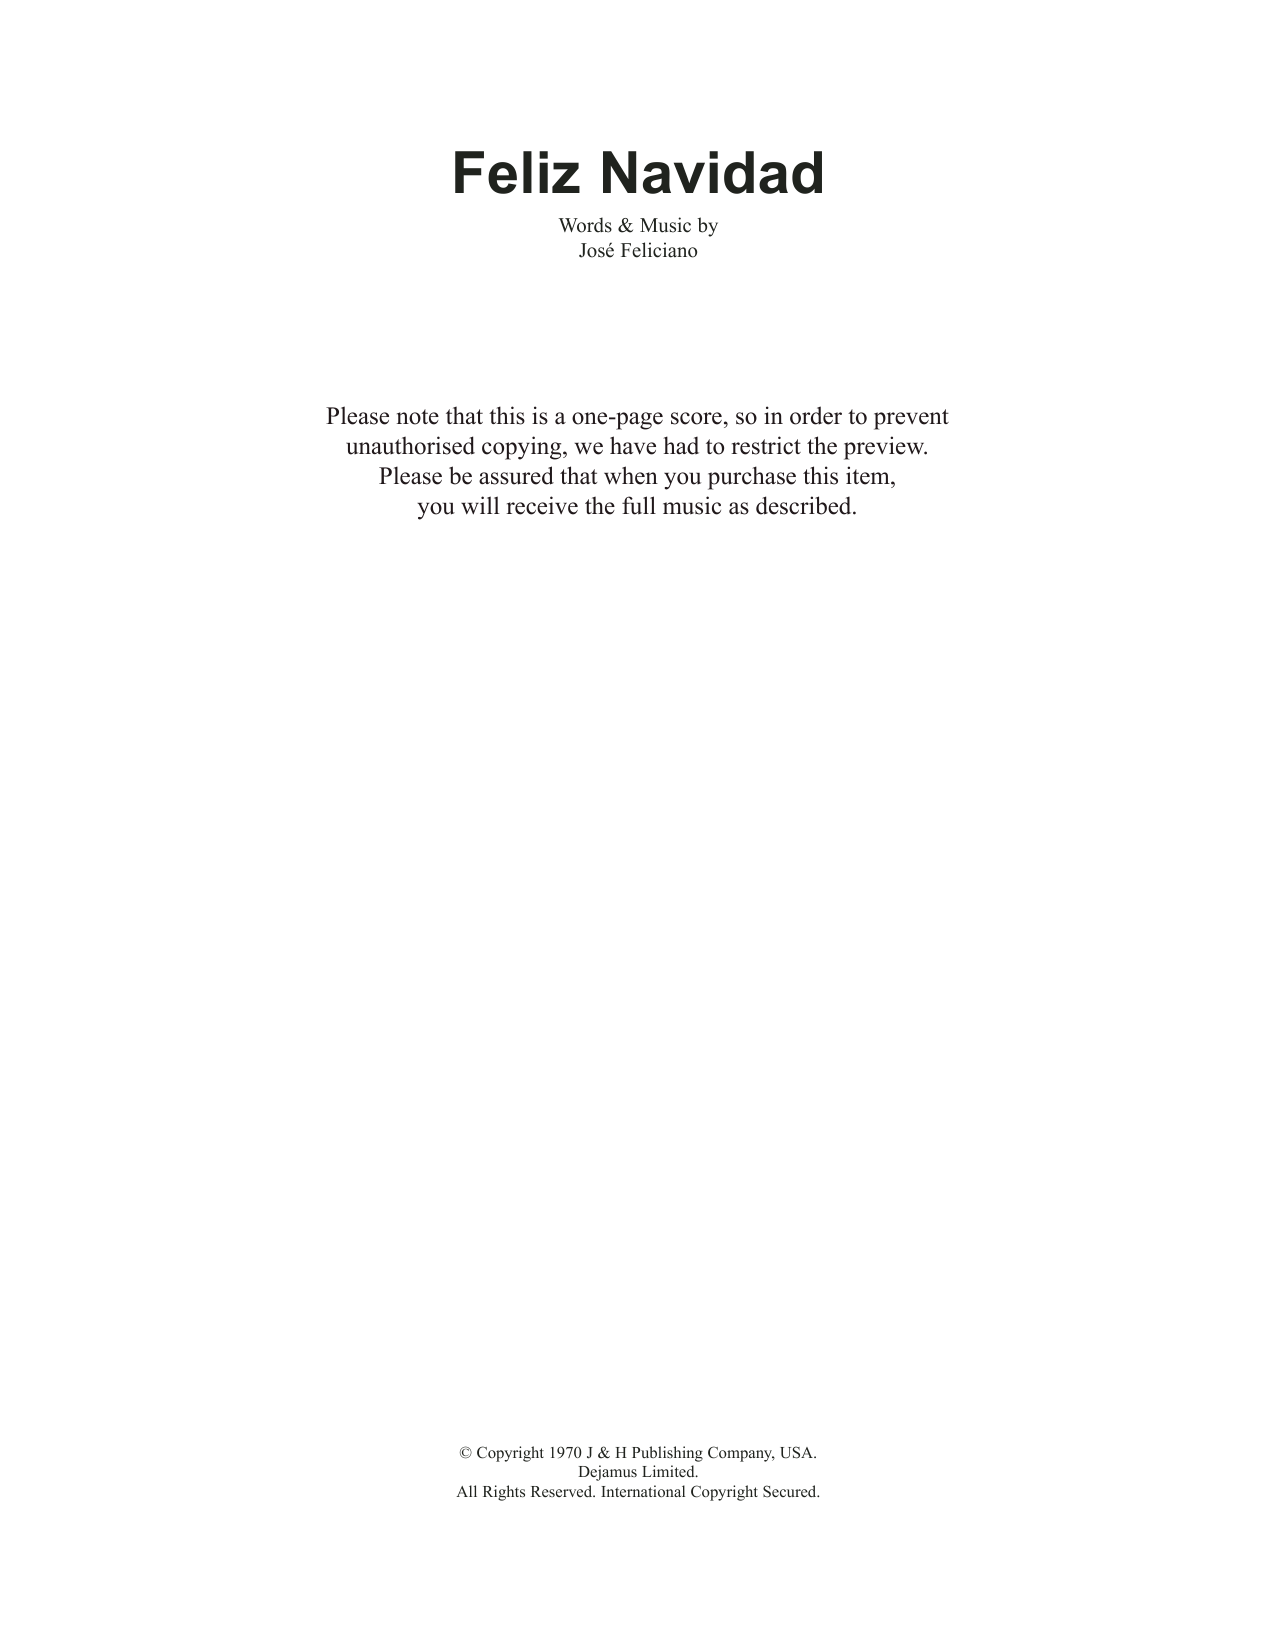 Jose Feliciano Feliz Navidad Sheet Music Notes & Chords for Clarinet Duet - Download or Print PDF